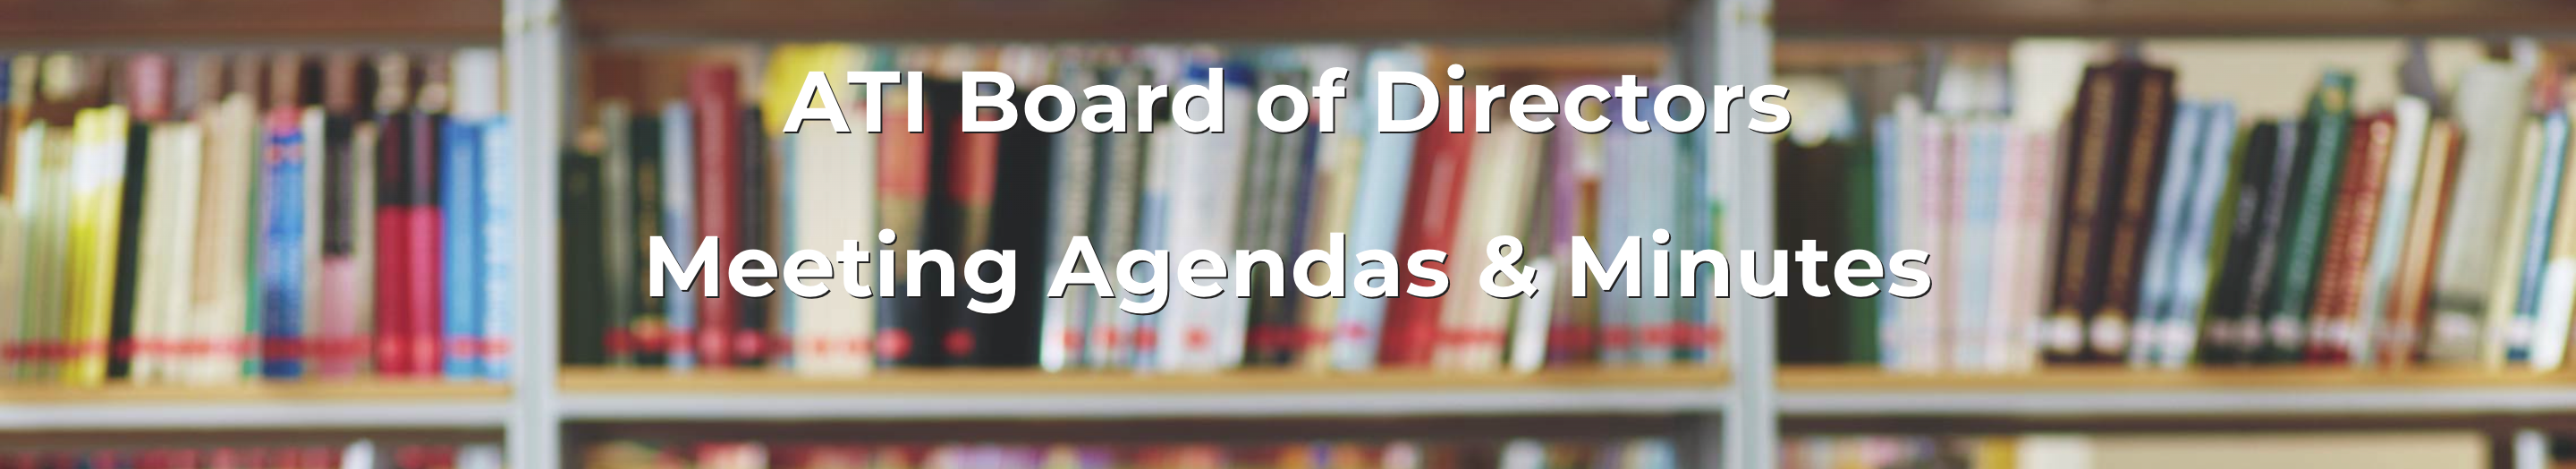 ATI Board of Directors Meeting Agendas & Minutes